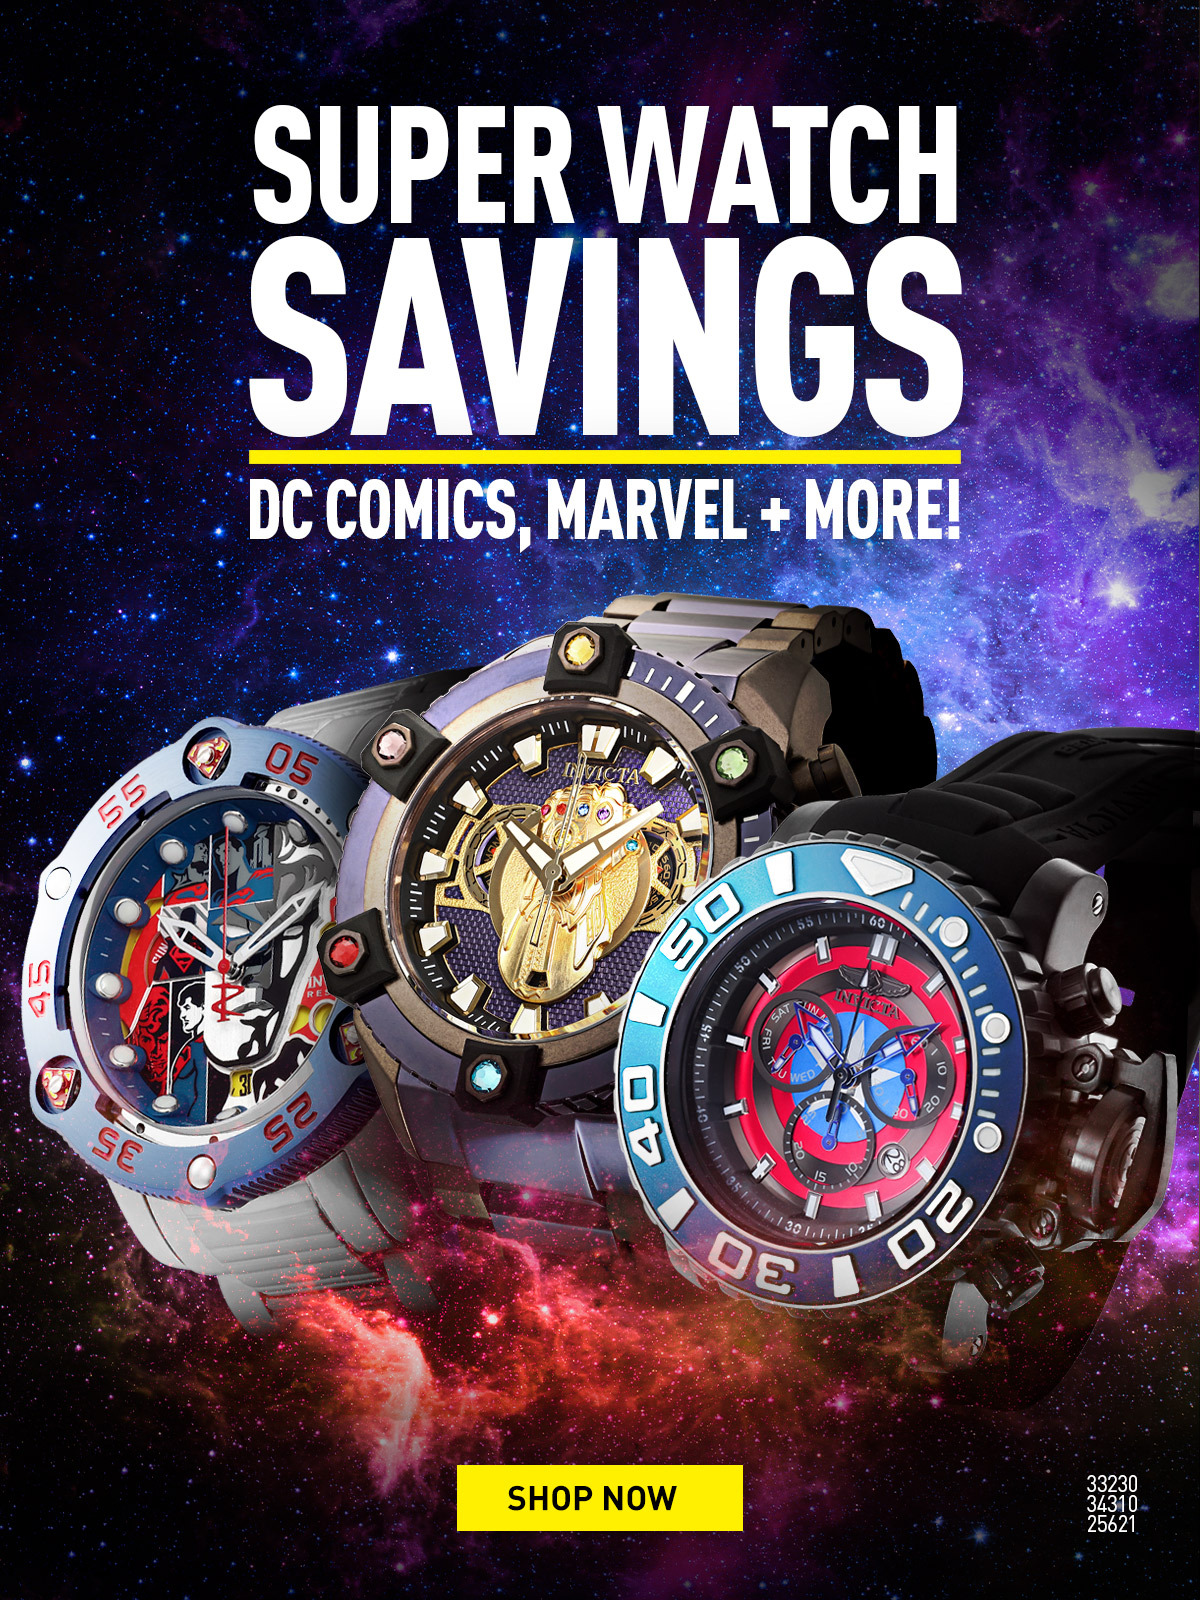 Super watch savings! DC Comics, Marvel + more!